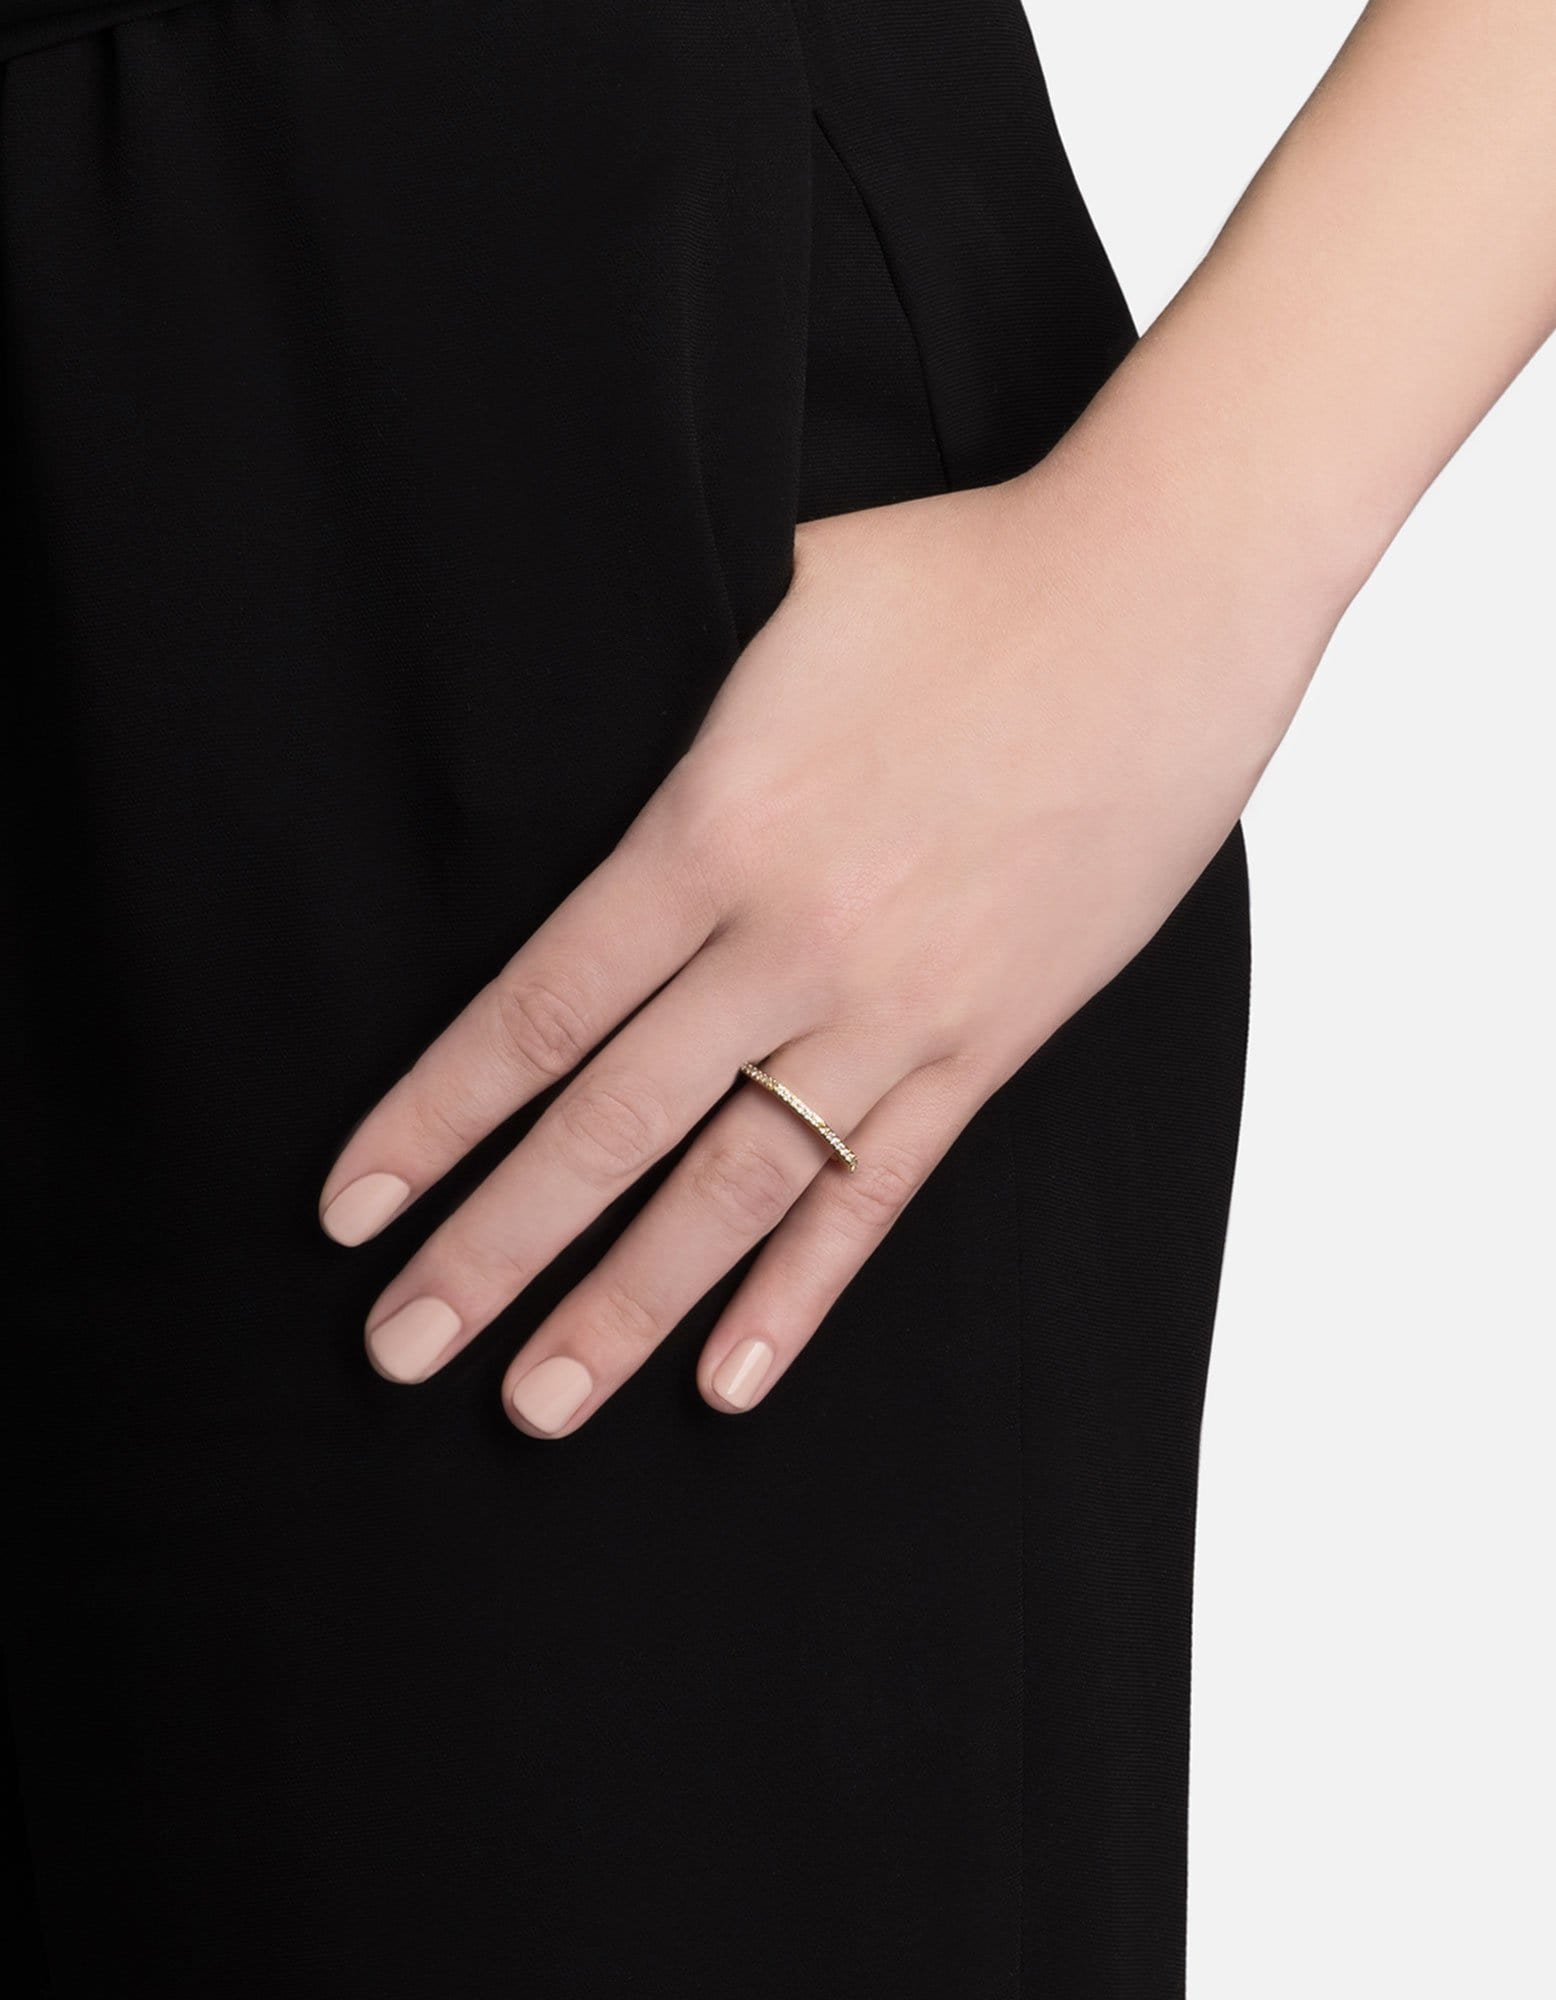 Bly Ring, 14k Gold Pavé | Women's Rings | Miansai